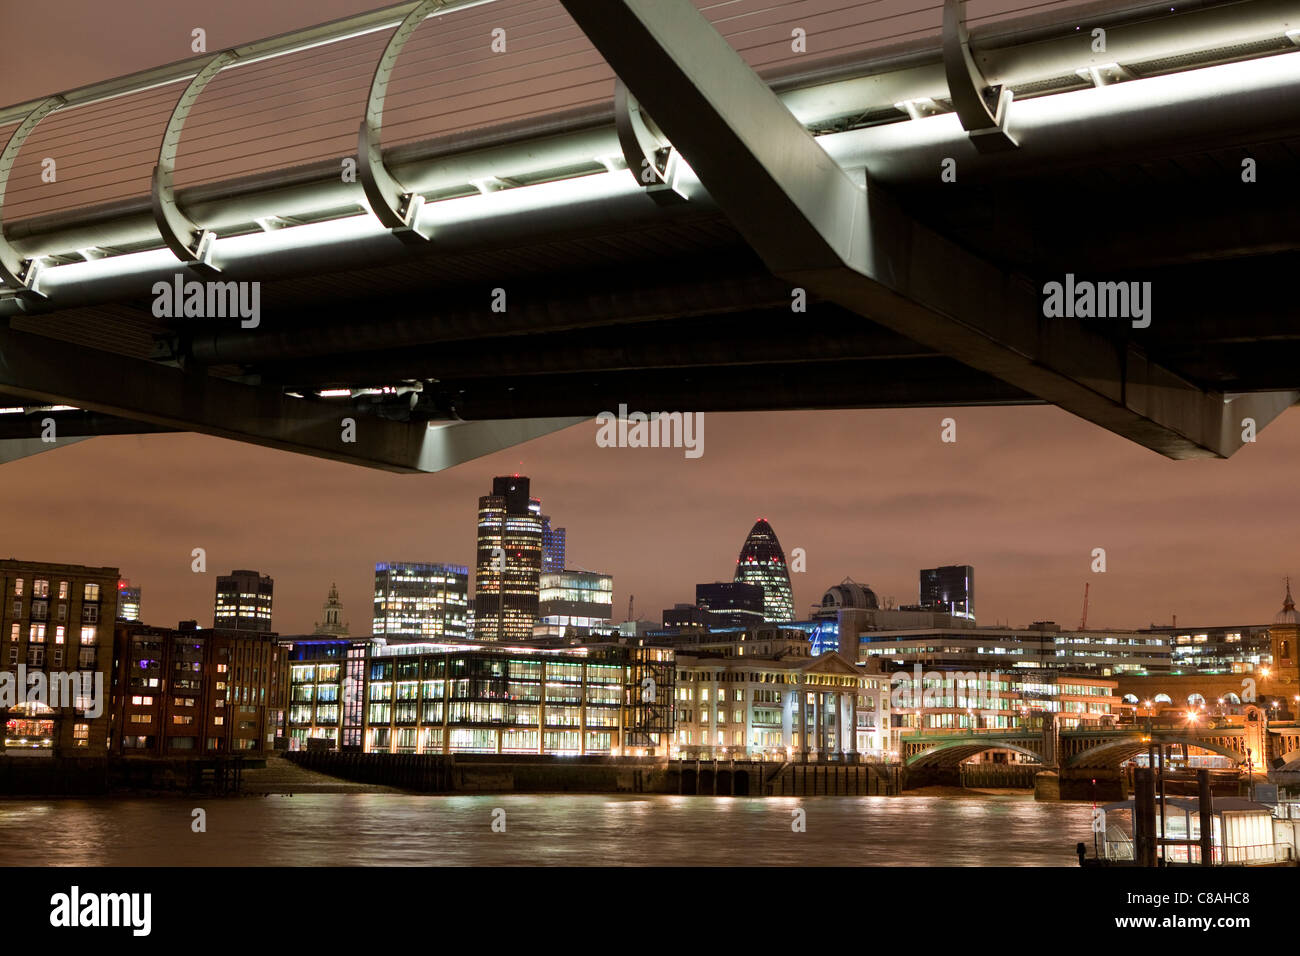 The Millennium Foot Bridge in London at night. Stock Photo